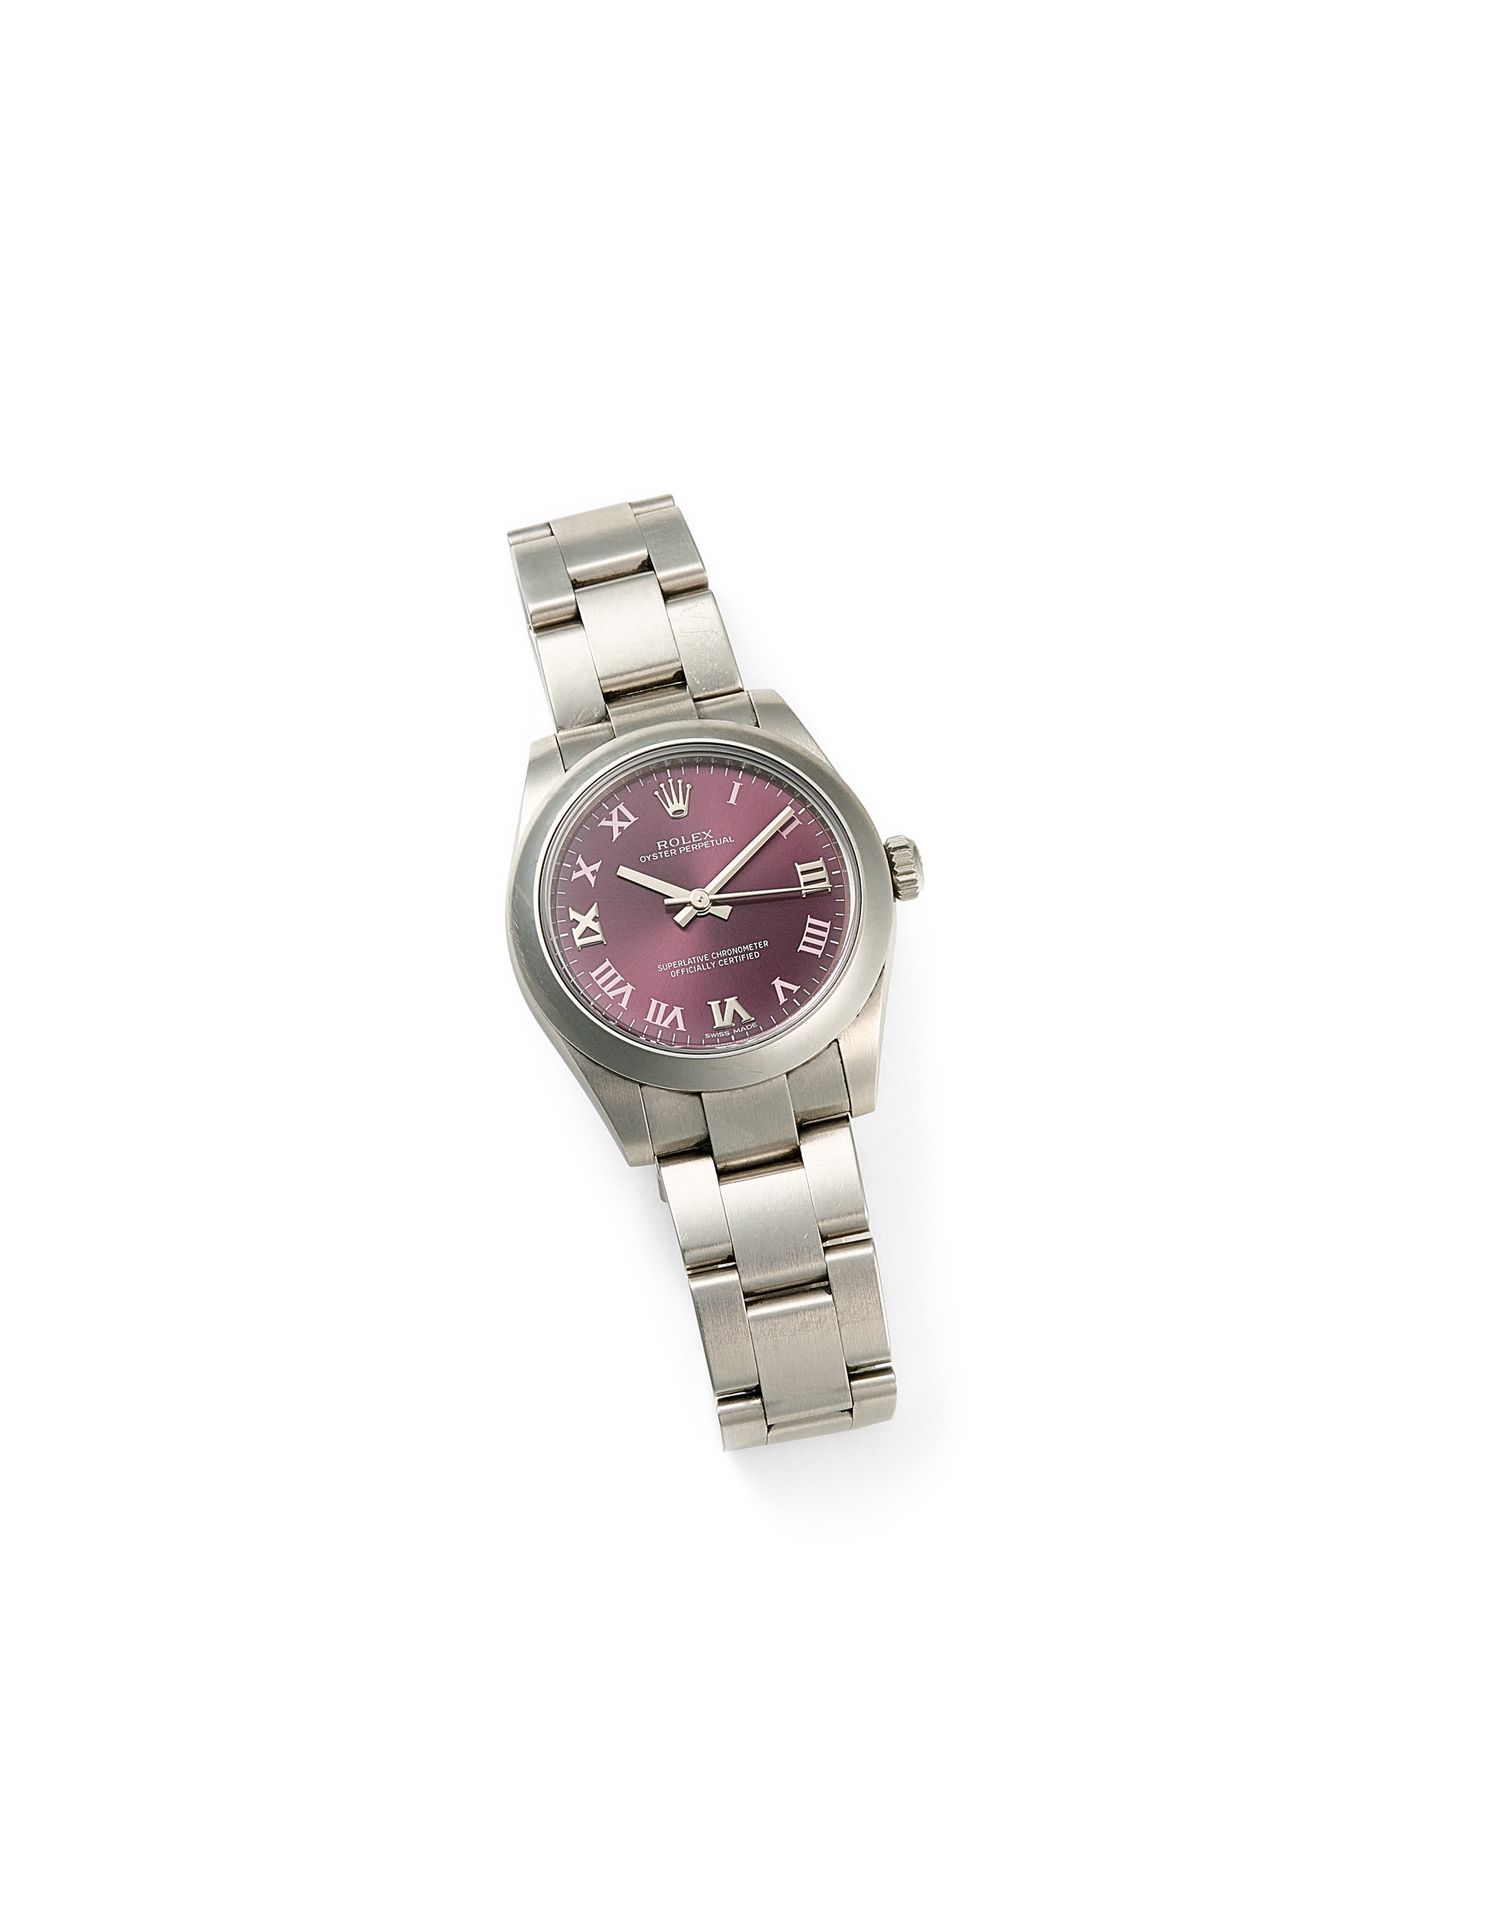 ROLEX OYSTER PERPETUAL Steel mid-size bracelet watch
Round case, screwed crown a&hellip;